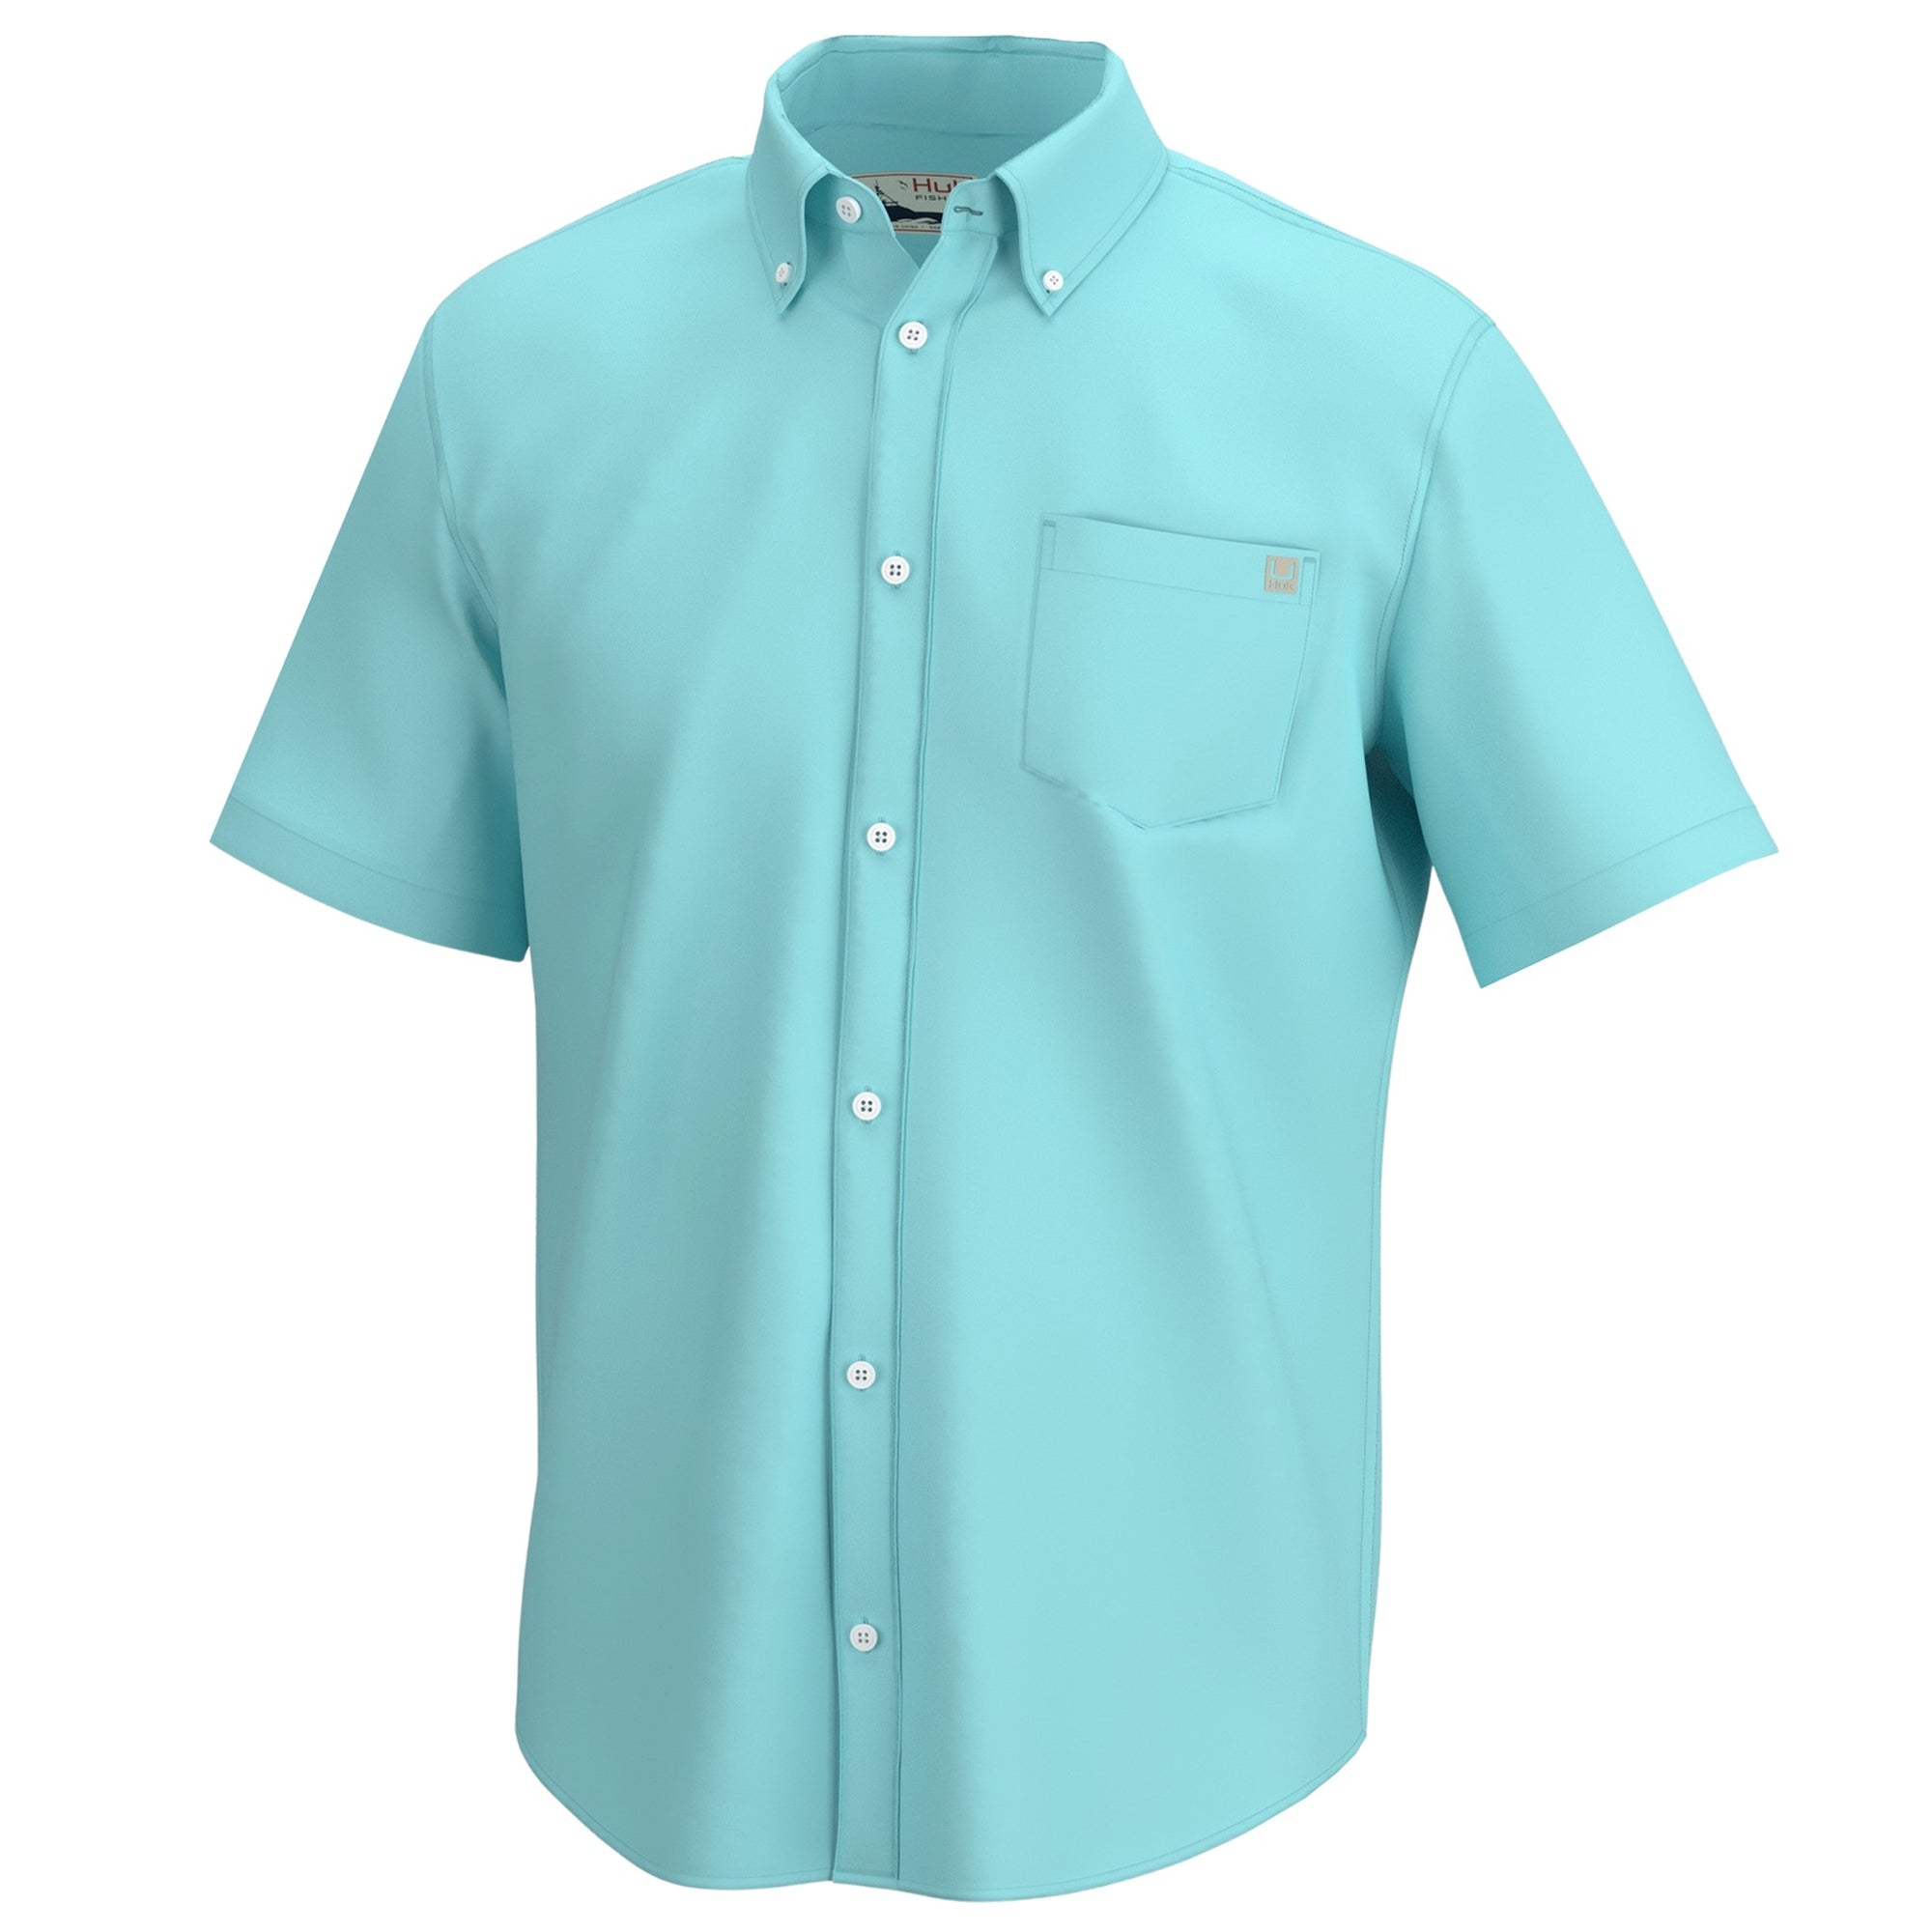 HUK Kona Solid Men's Short Sleeve Shirt